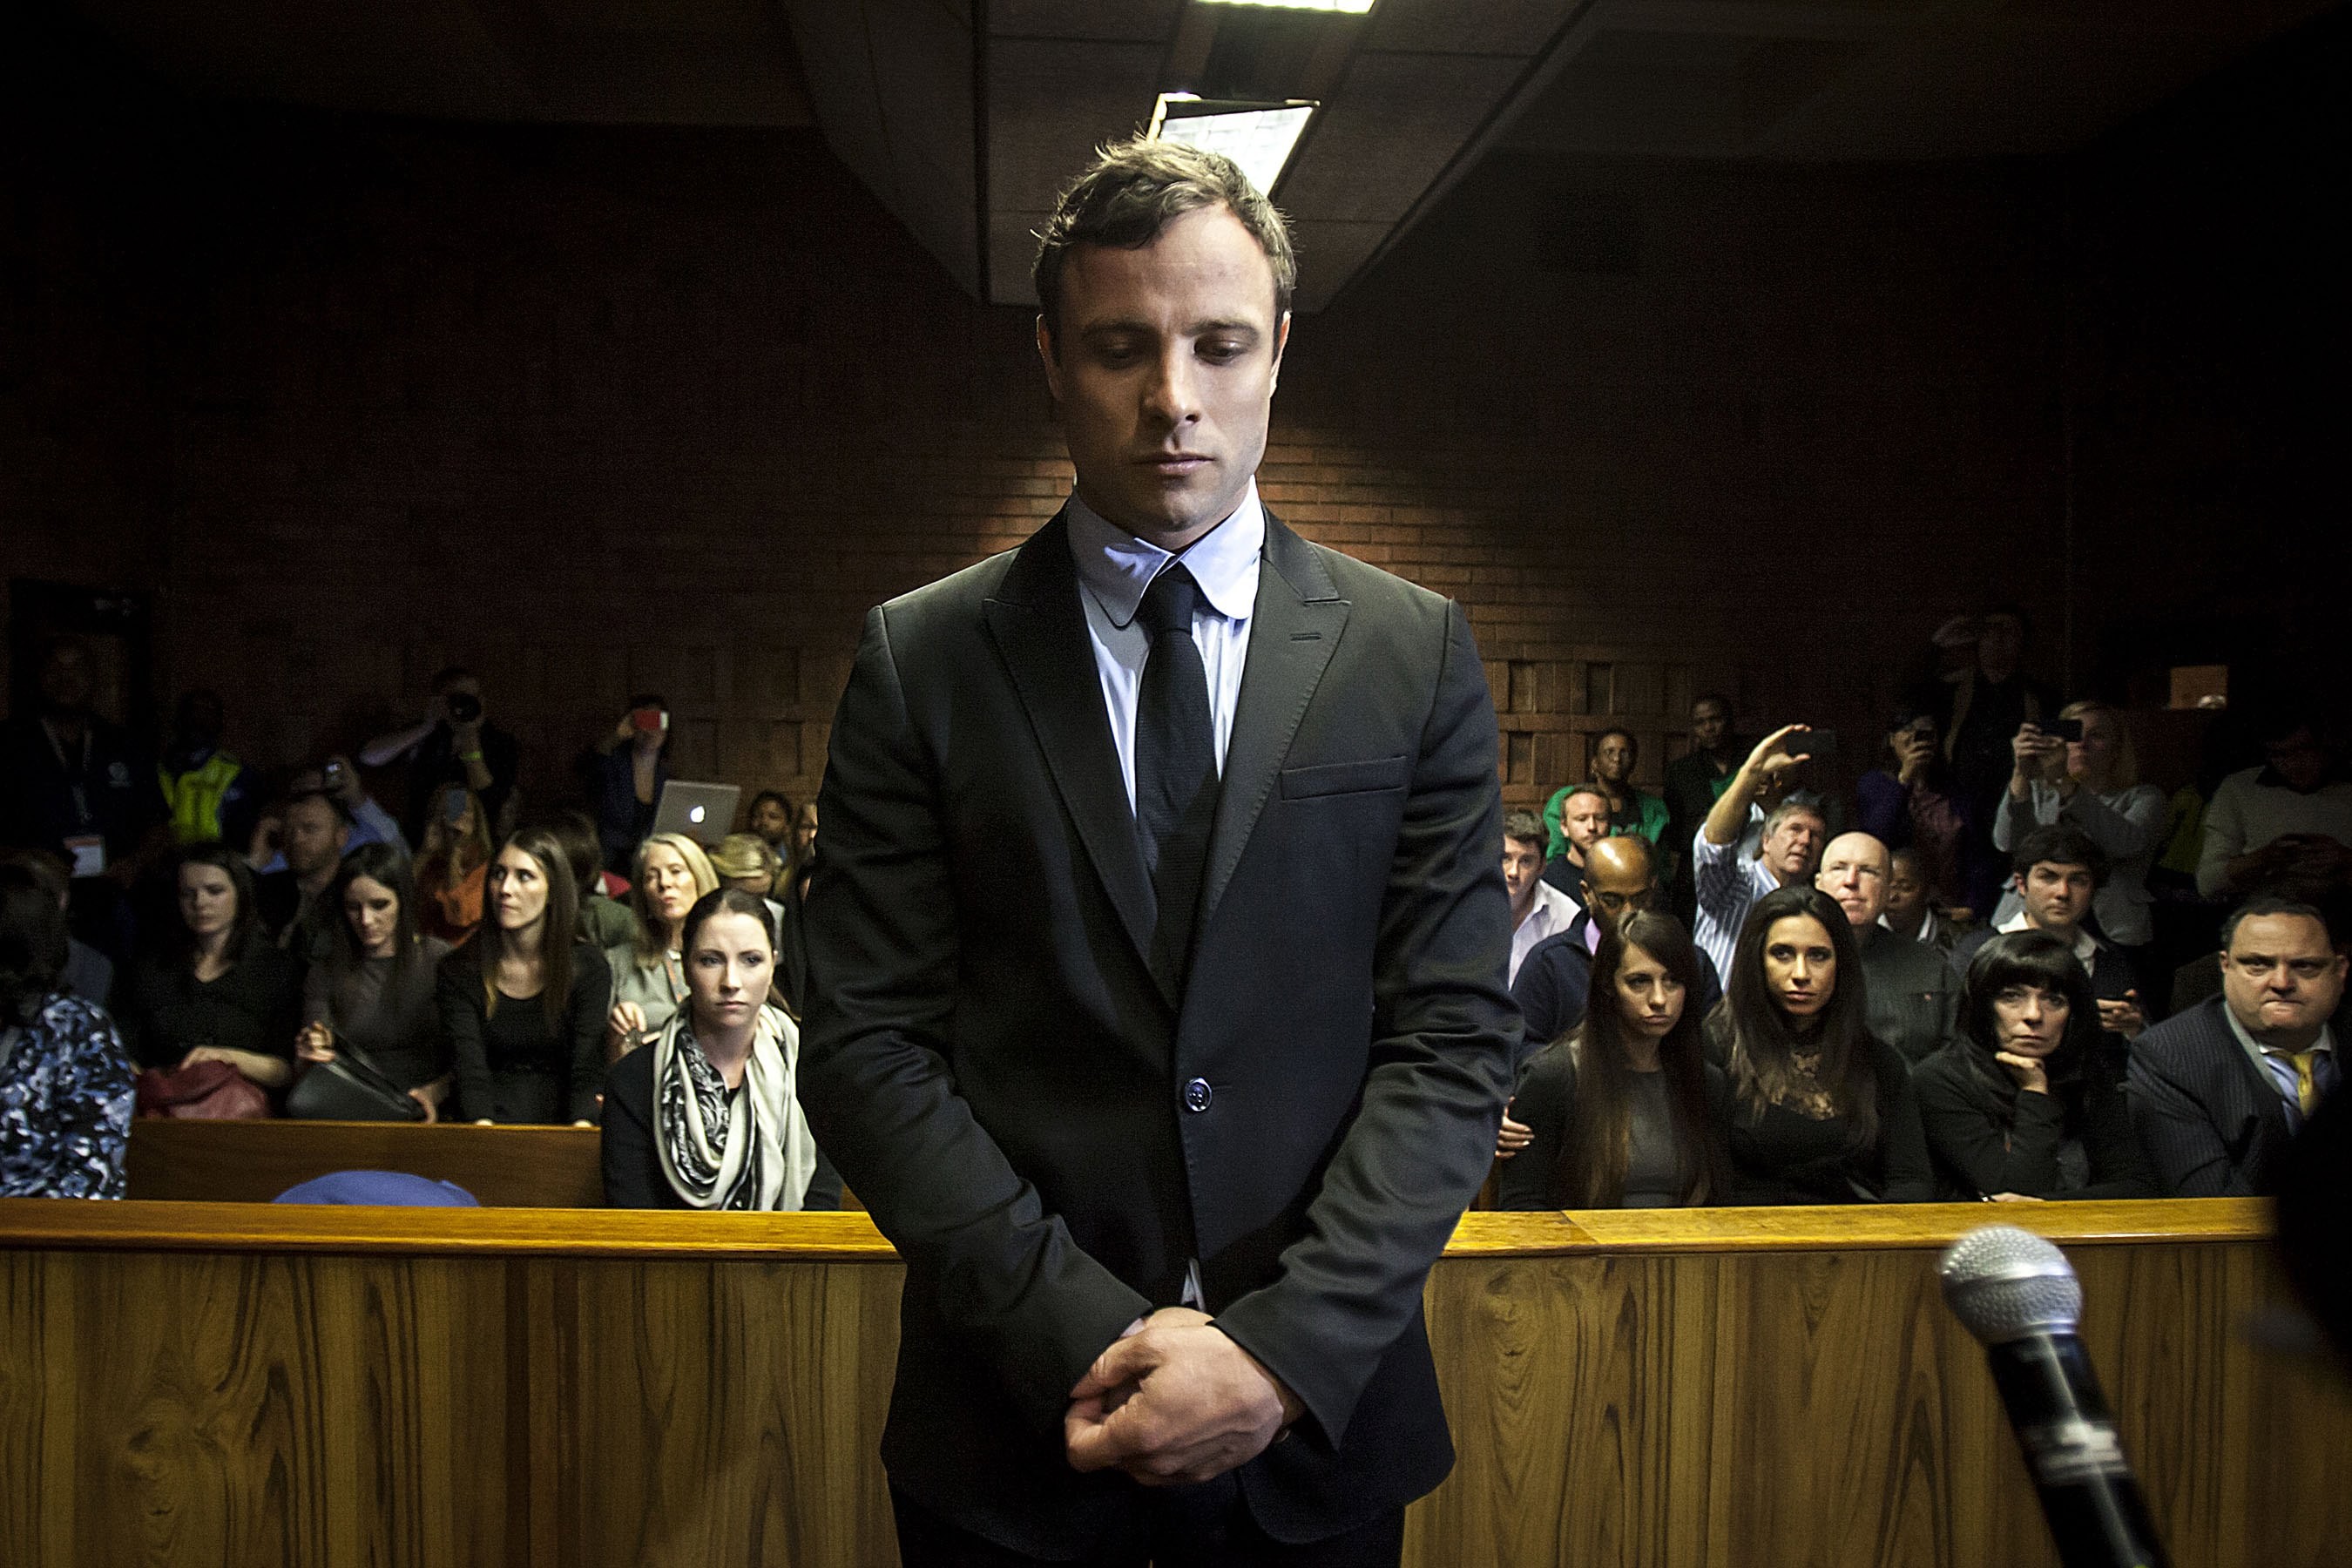 Oscar Pistorius at the Pretoria Magistrates Court in Pretoria, South Africa on August 19, 2013. Photo: EPA